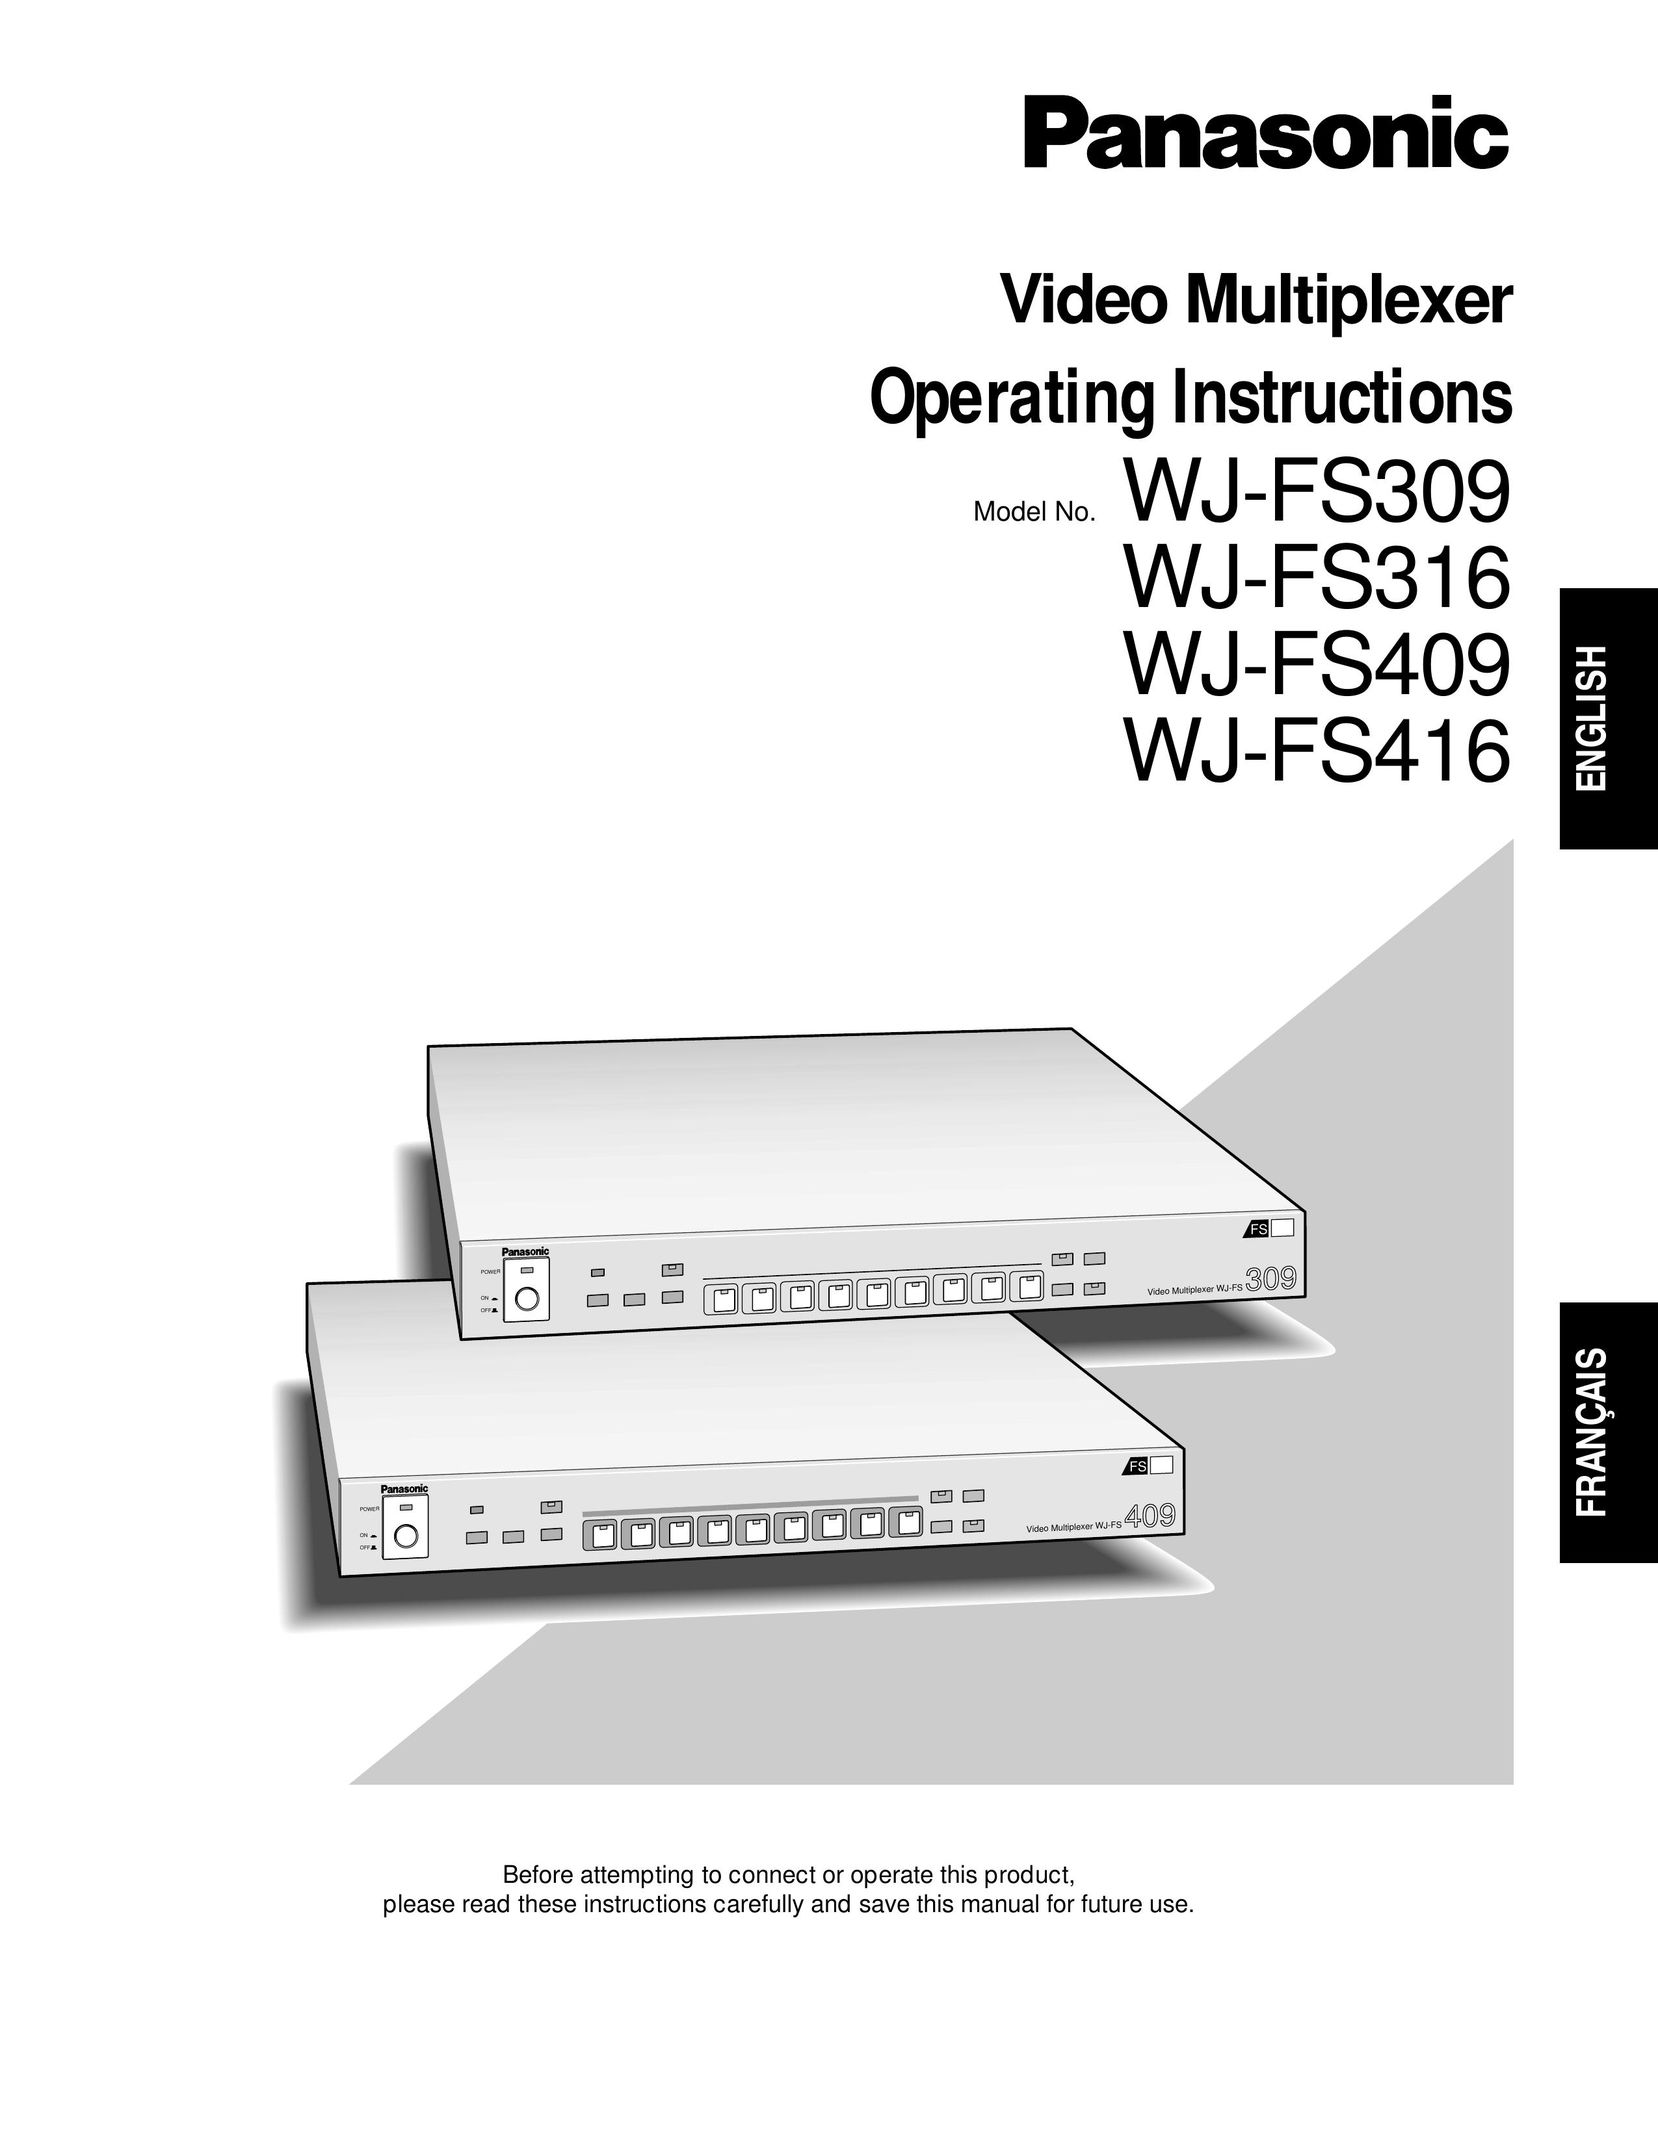 Panasonic WJ-FS316 Home Theater Server User Manual